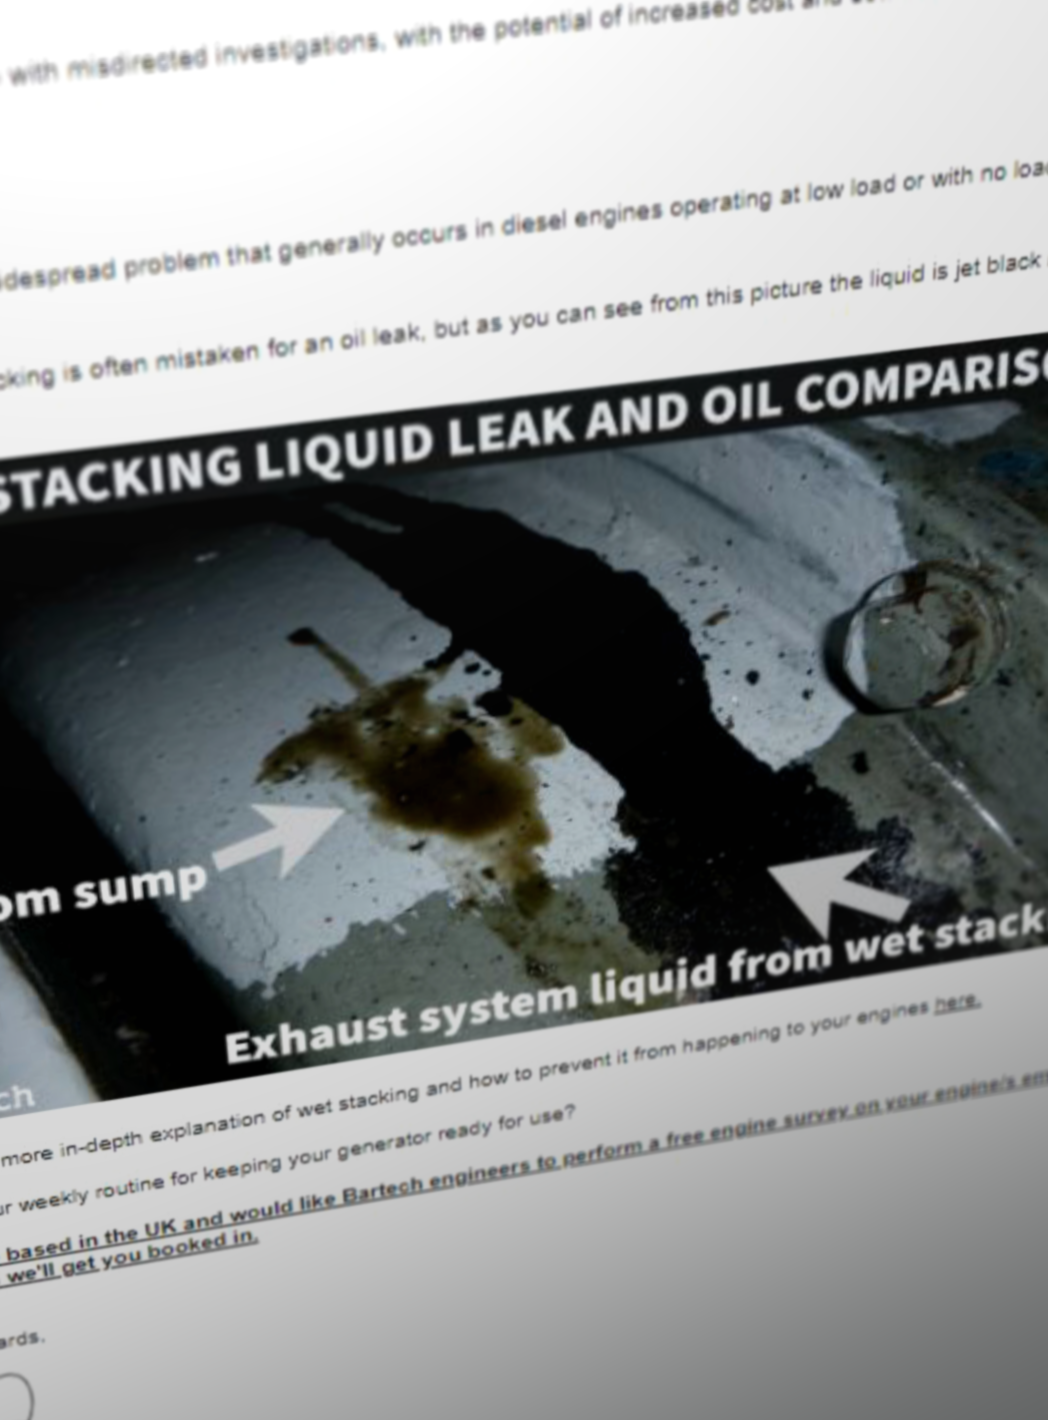 Oil leak or wet stacking